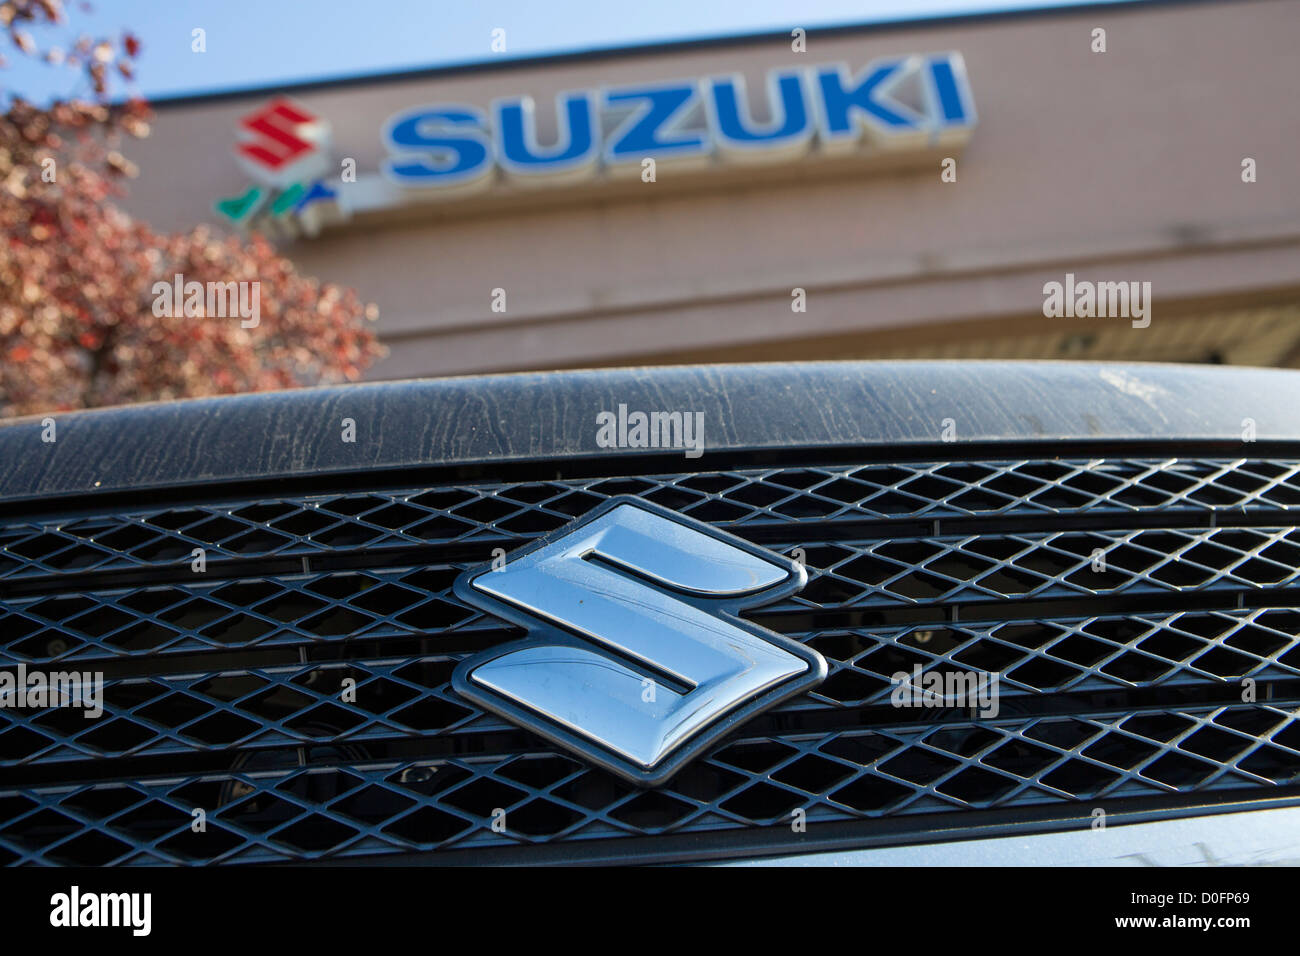 A Suzuki car dealership in the United States.  Stock Photo